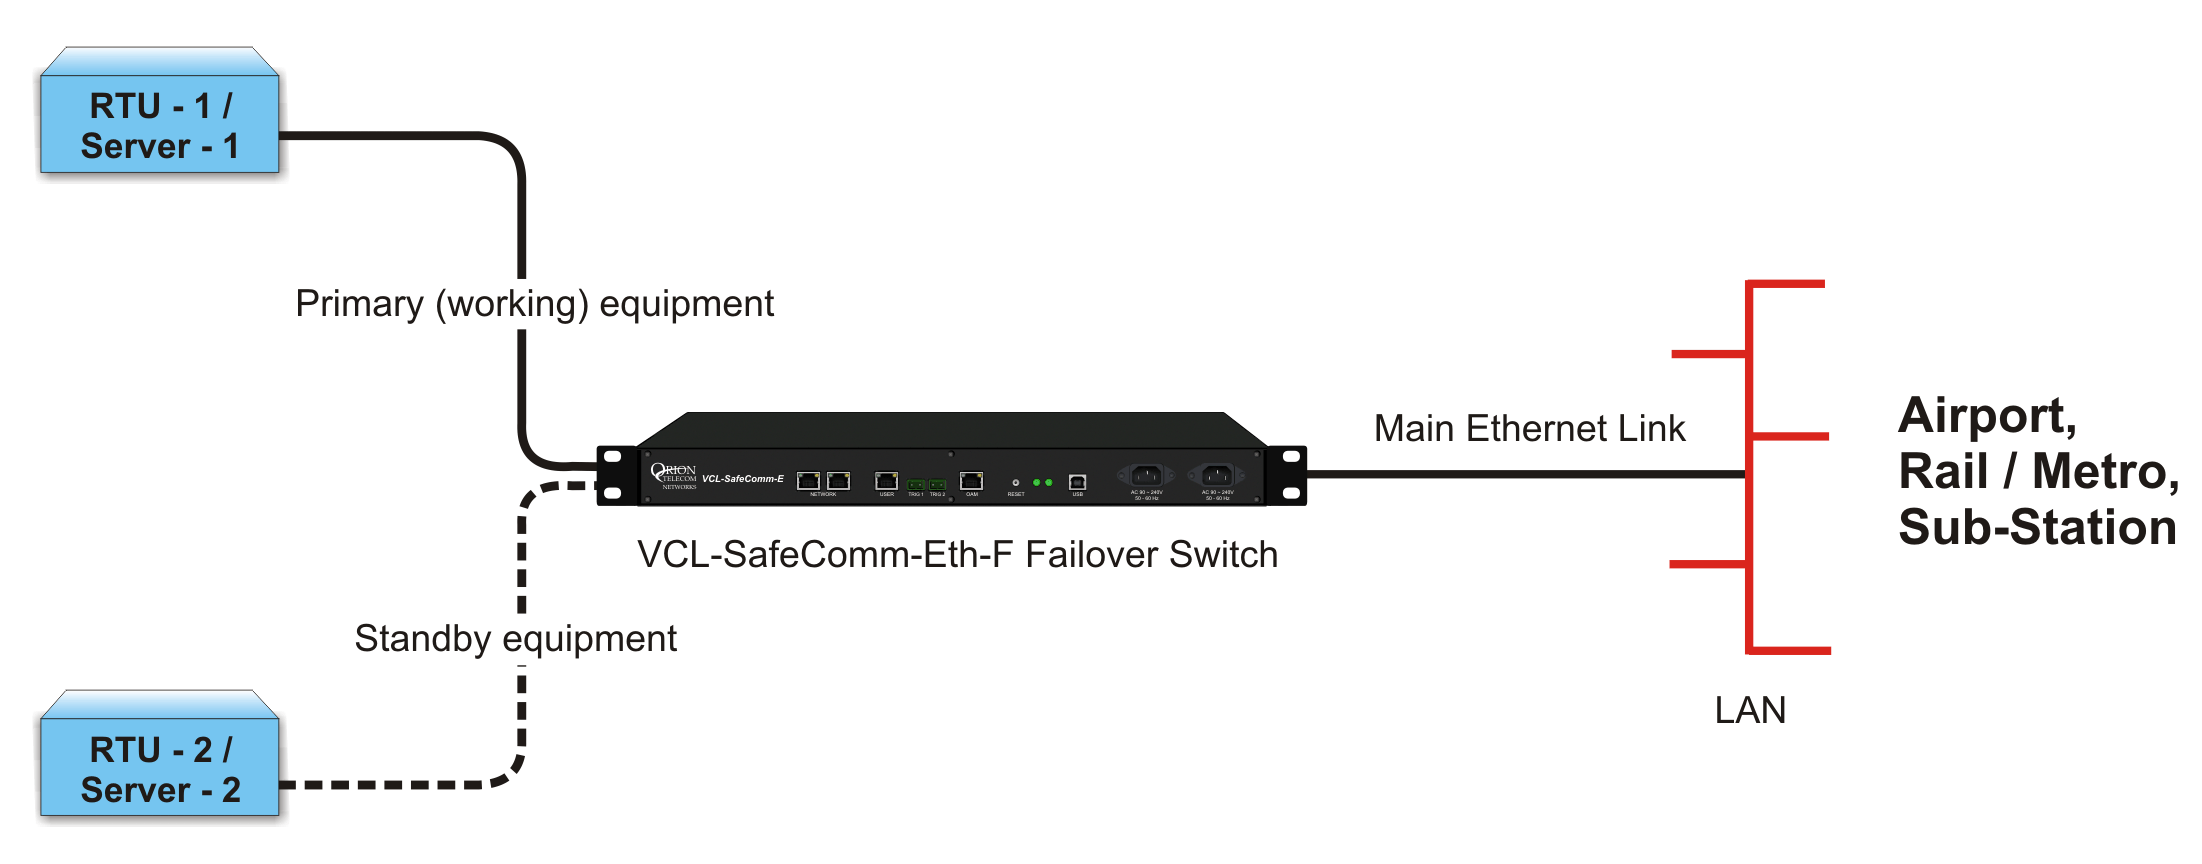 Ethernet link is connected to RTU-1 / Server-1